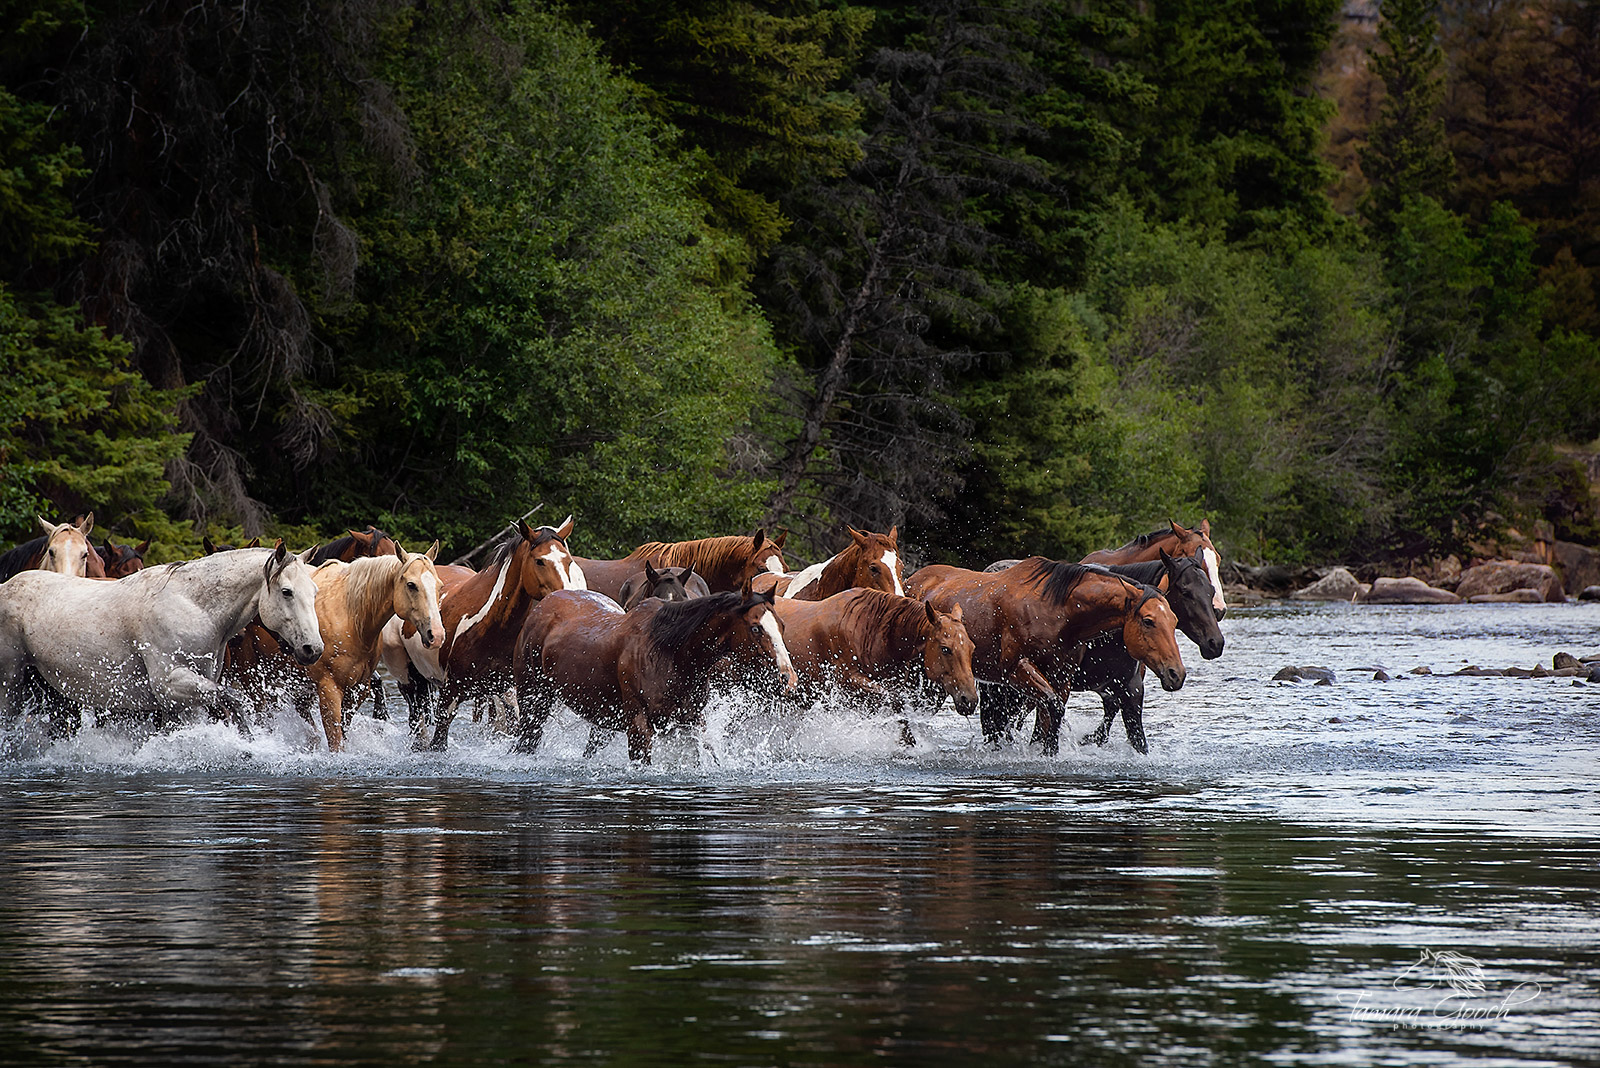 A herd of horses crossing a river